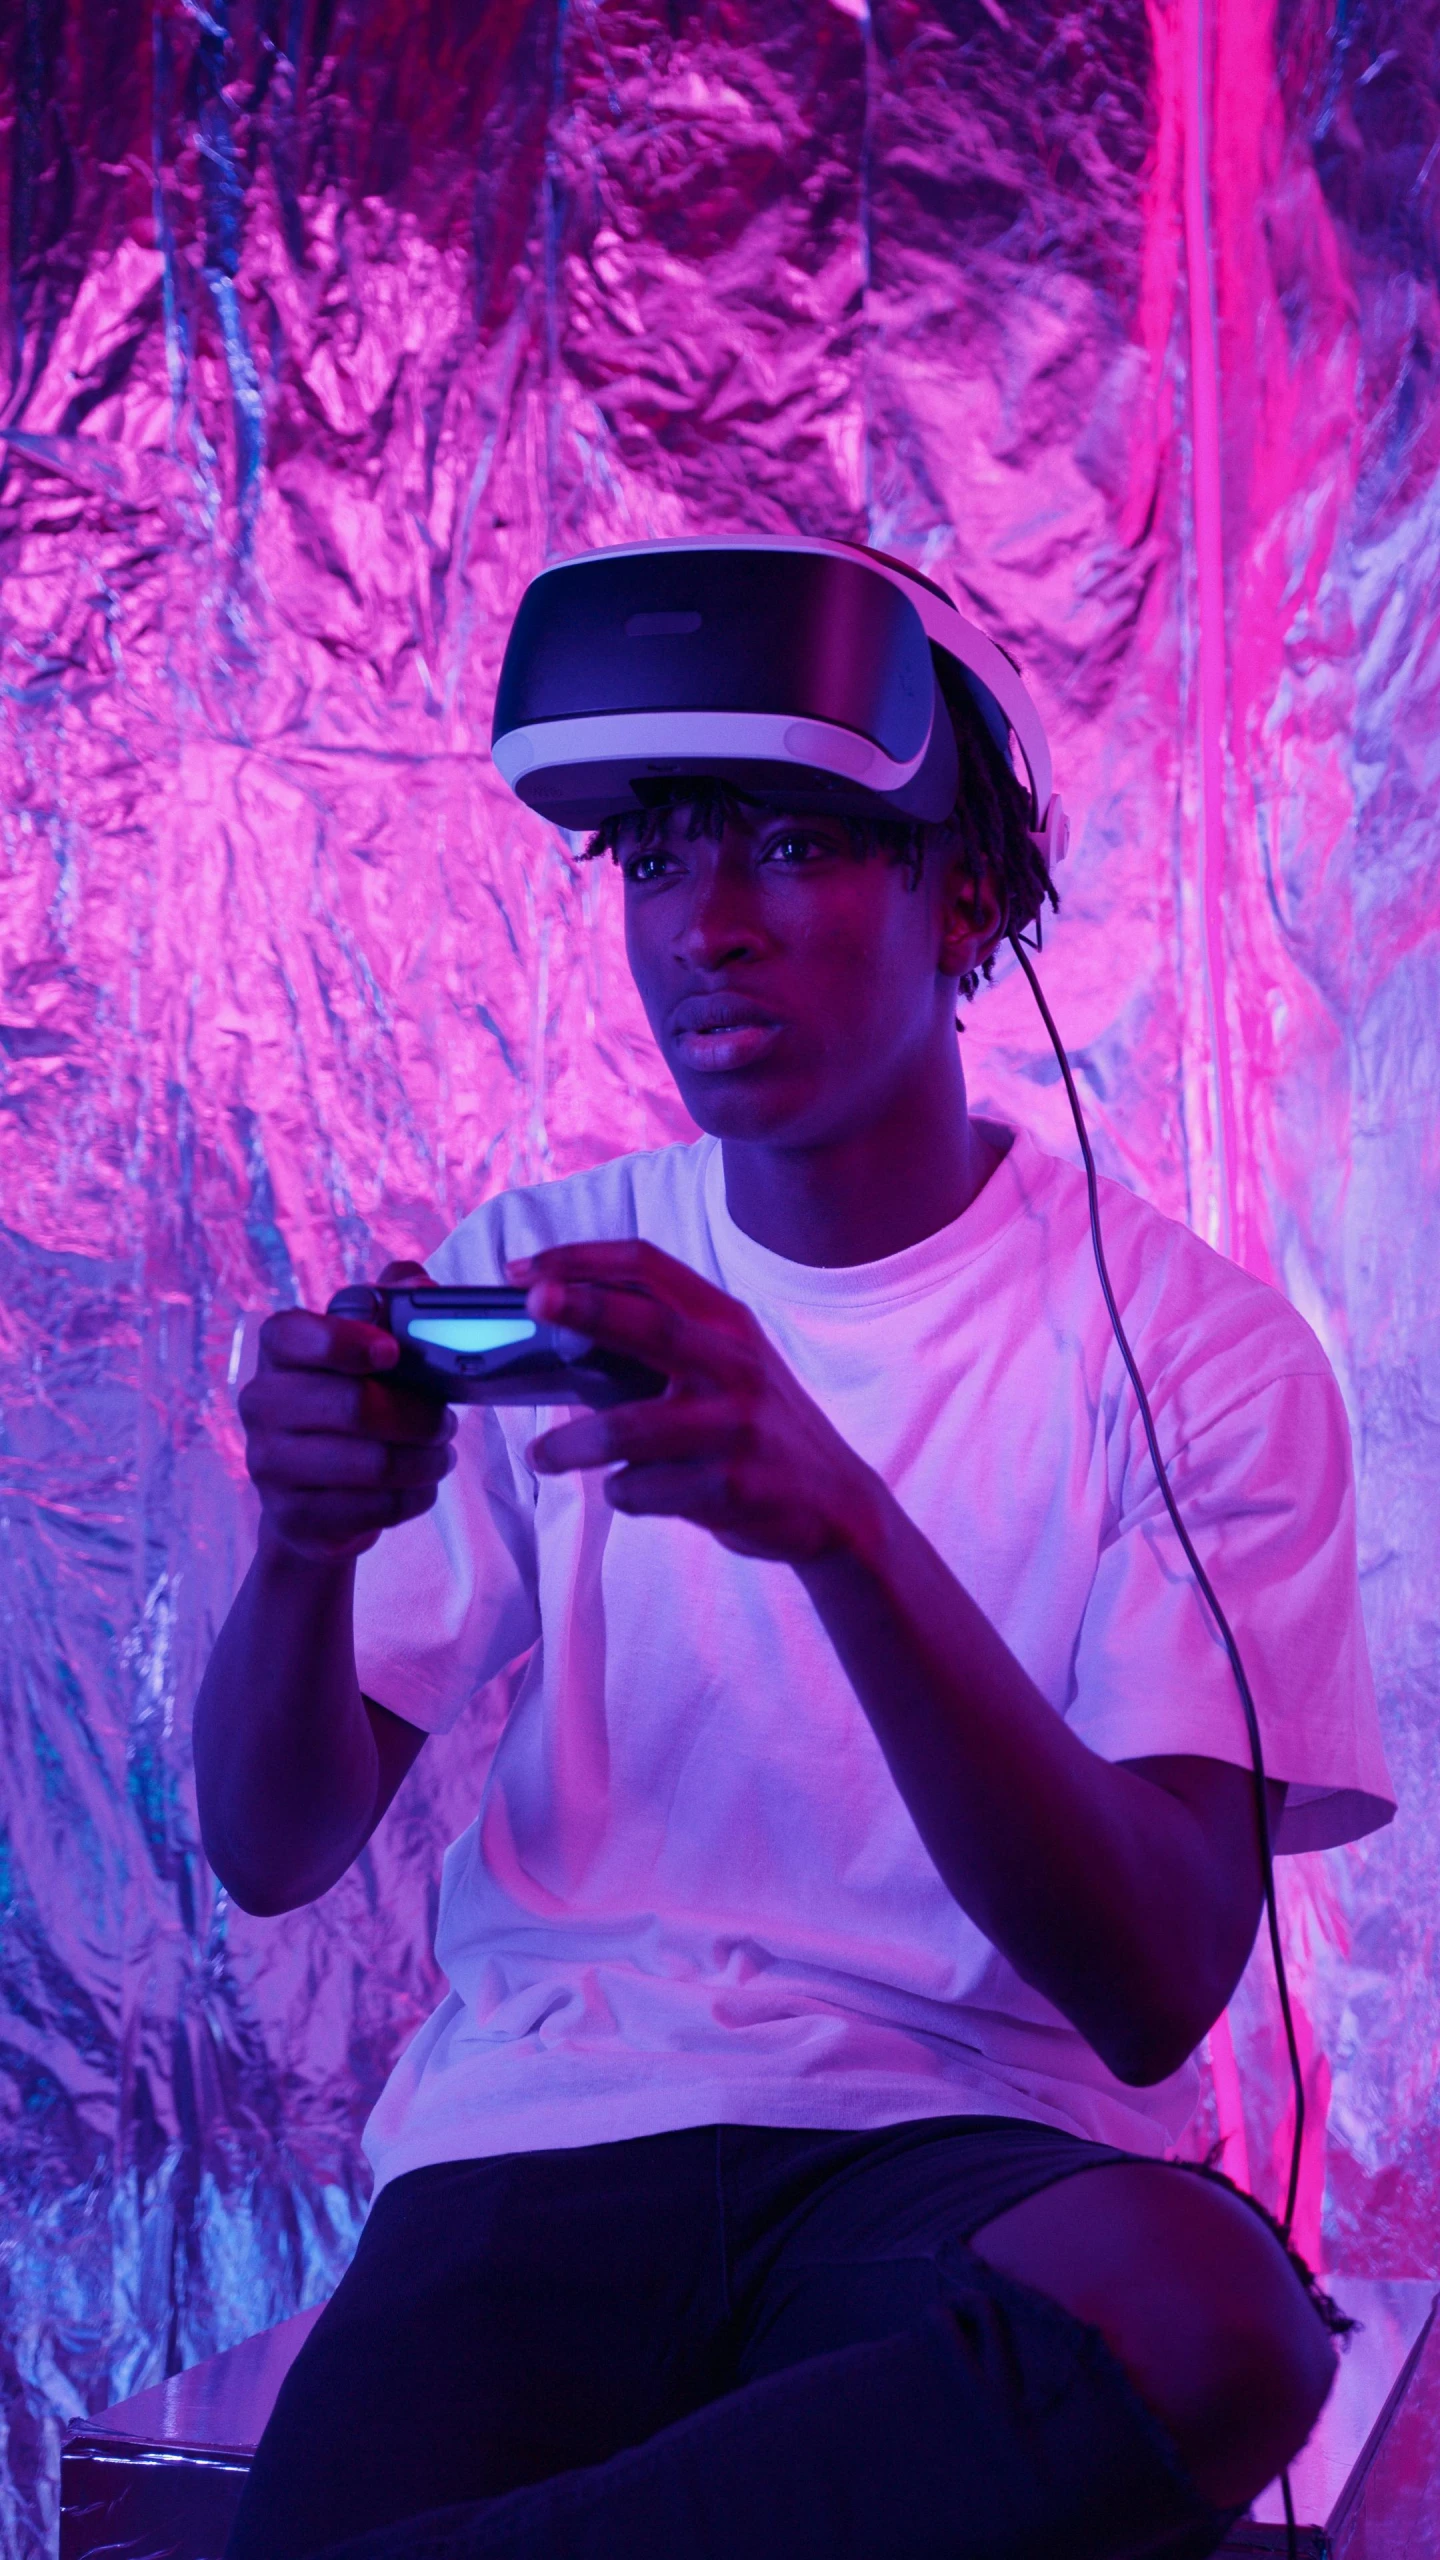 a man wearing a virtual reality headset playing a video game, by Carey Morris, pexels, afrofuturism, soft neon purple lighting, playboi carti portrait, instagram picture, black teenage boy